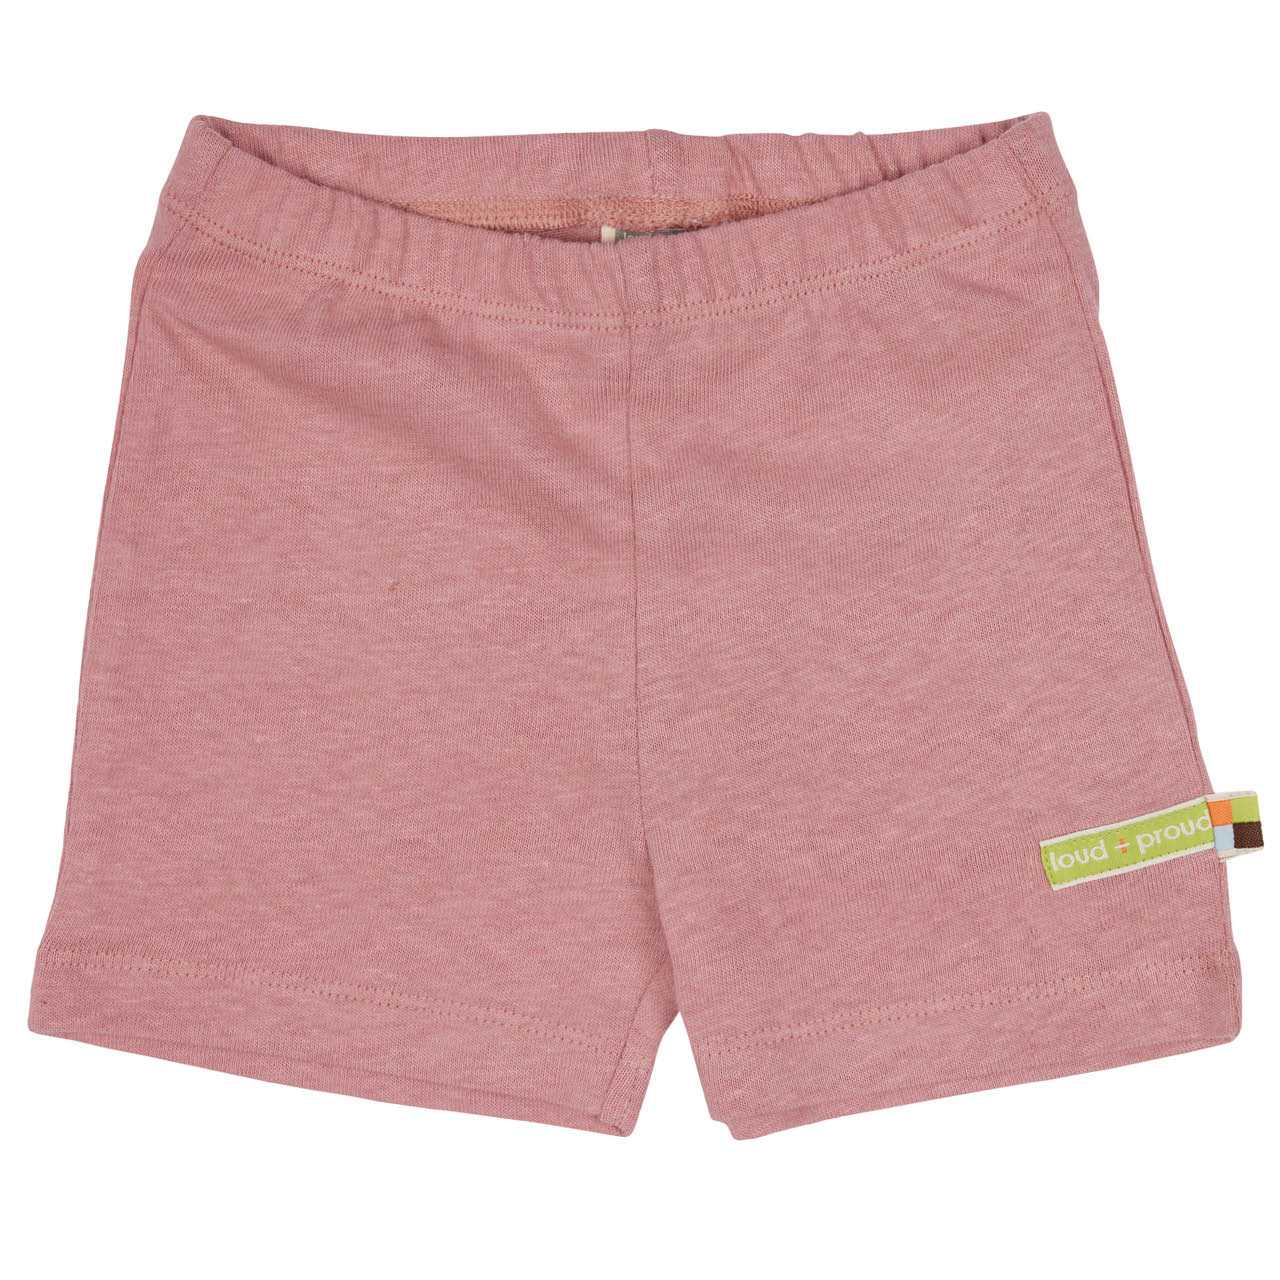 Leichte Leinen Shorts rosa